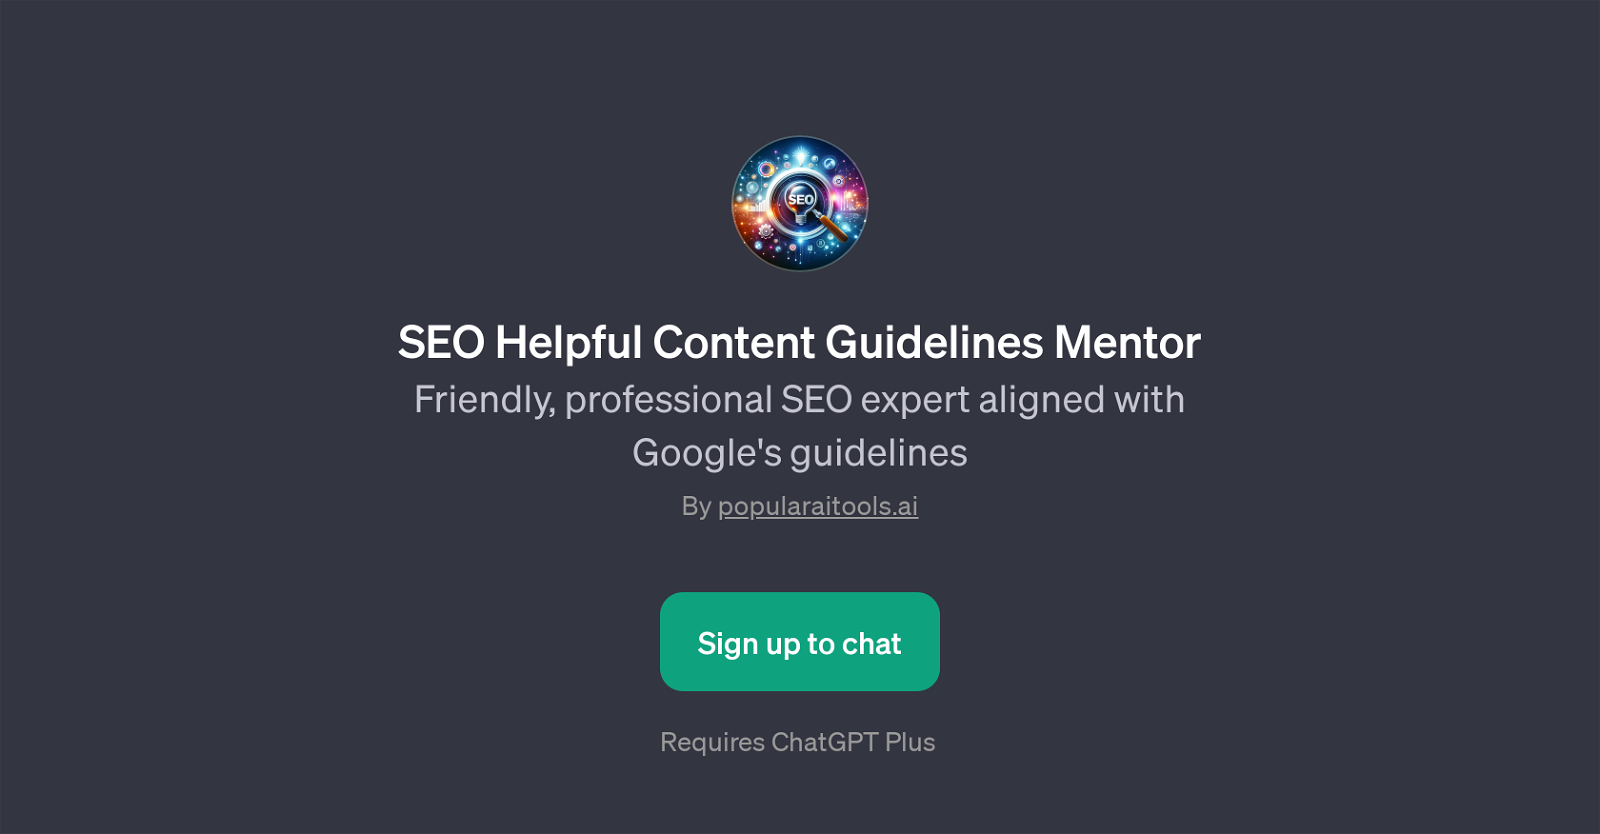 SEO Helpful Content Guidelines Mentor website